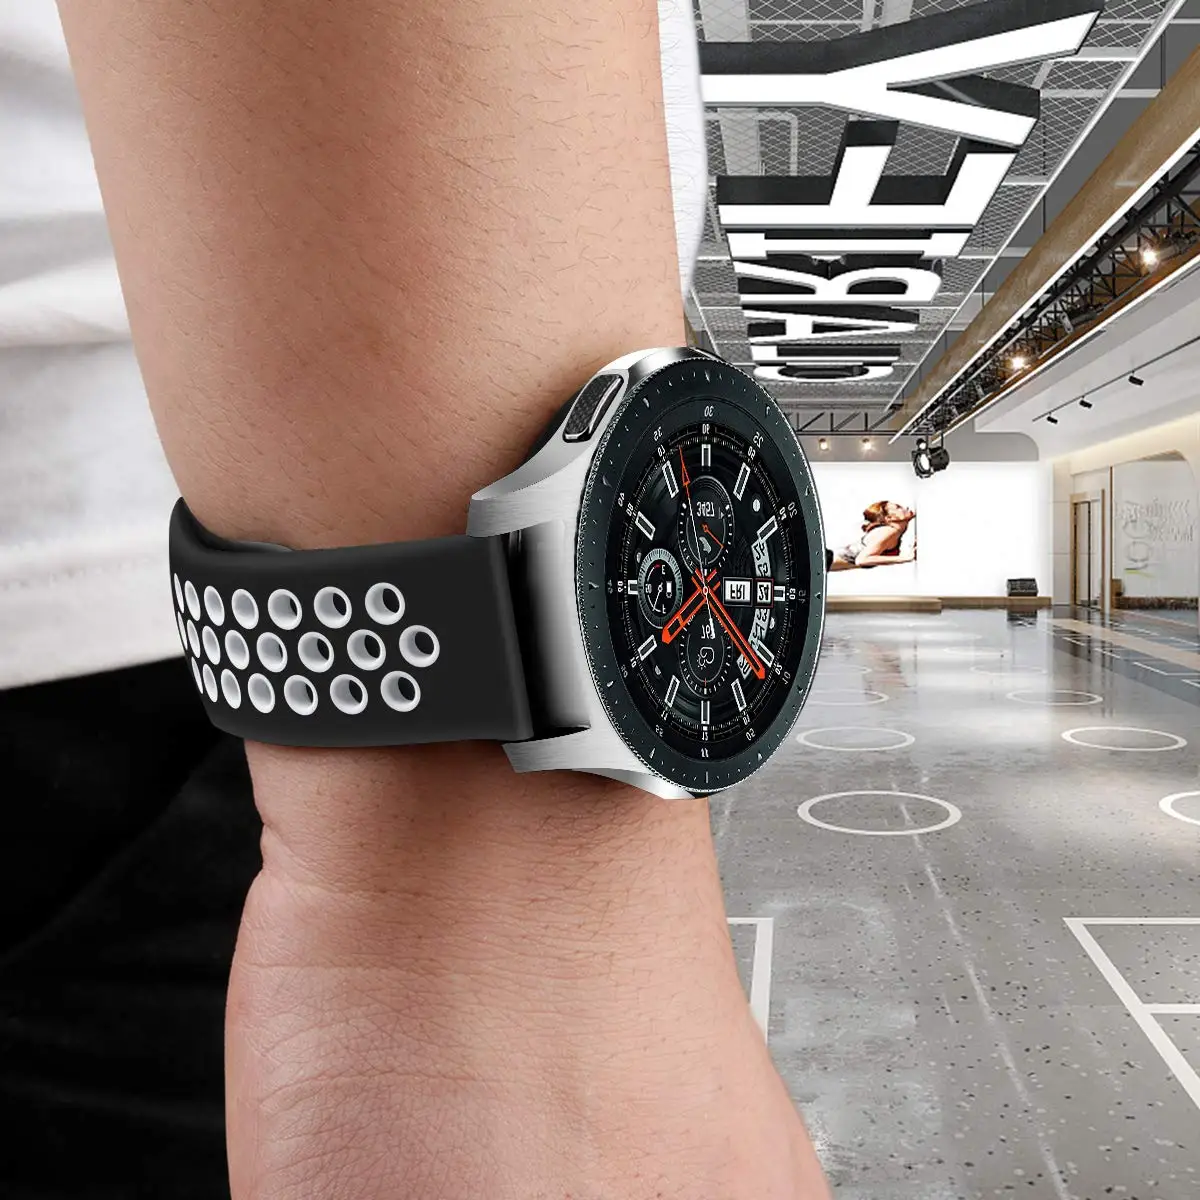 22 мм 20 мм ремешок для часов samsung band galaxy watch active 46 мм gear S3 frontier 42 мм huawei watch gt ремешок силиконовый ремешок для часов